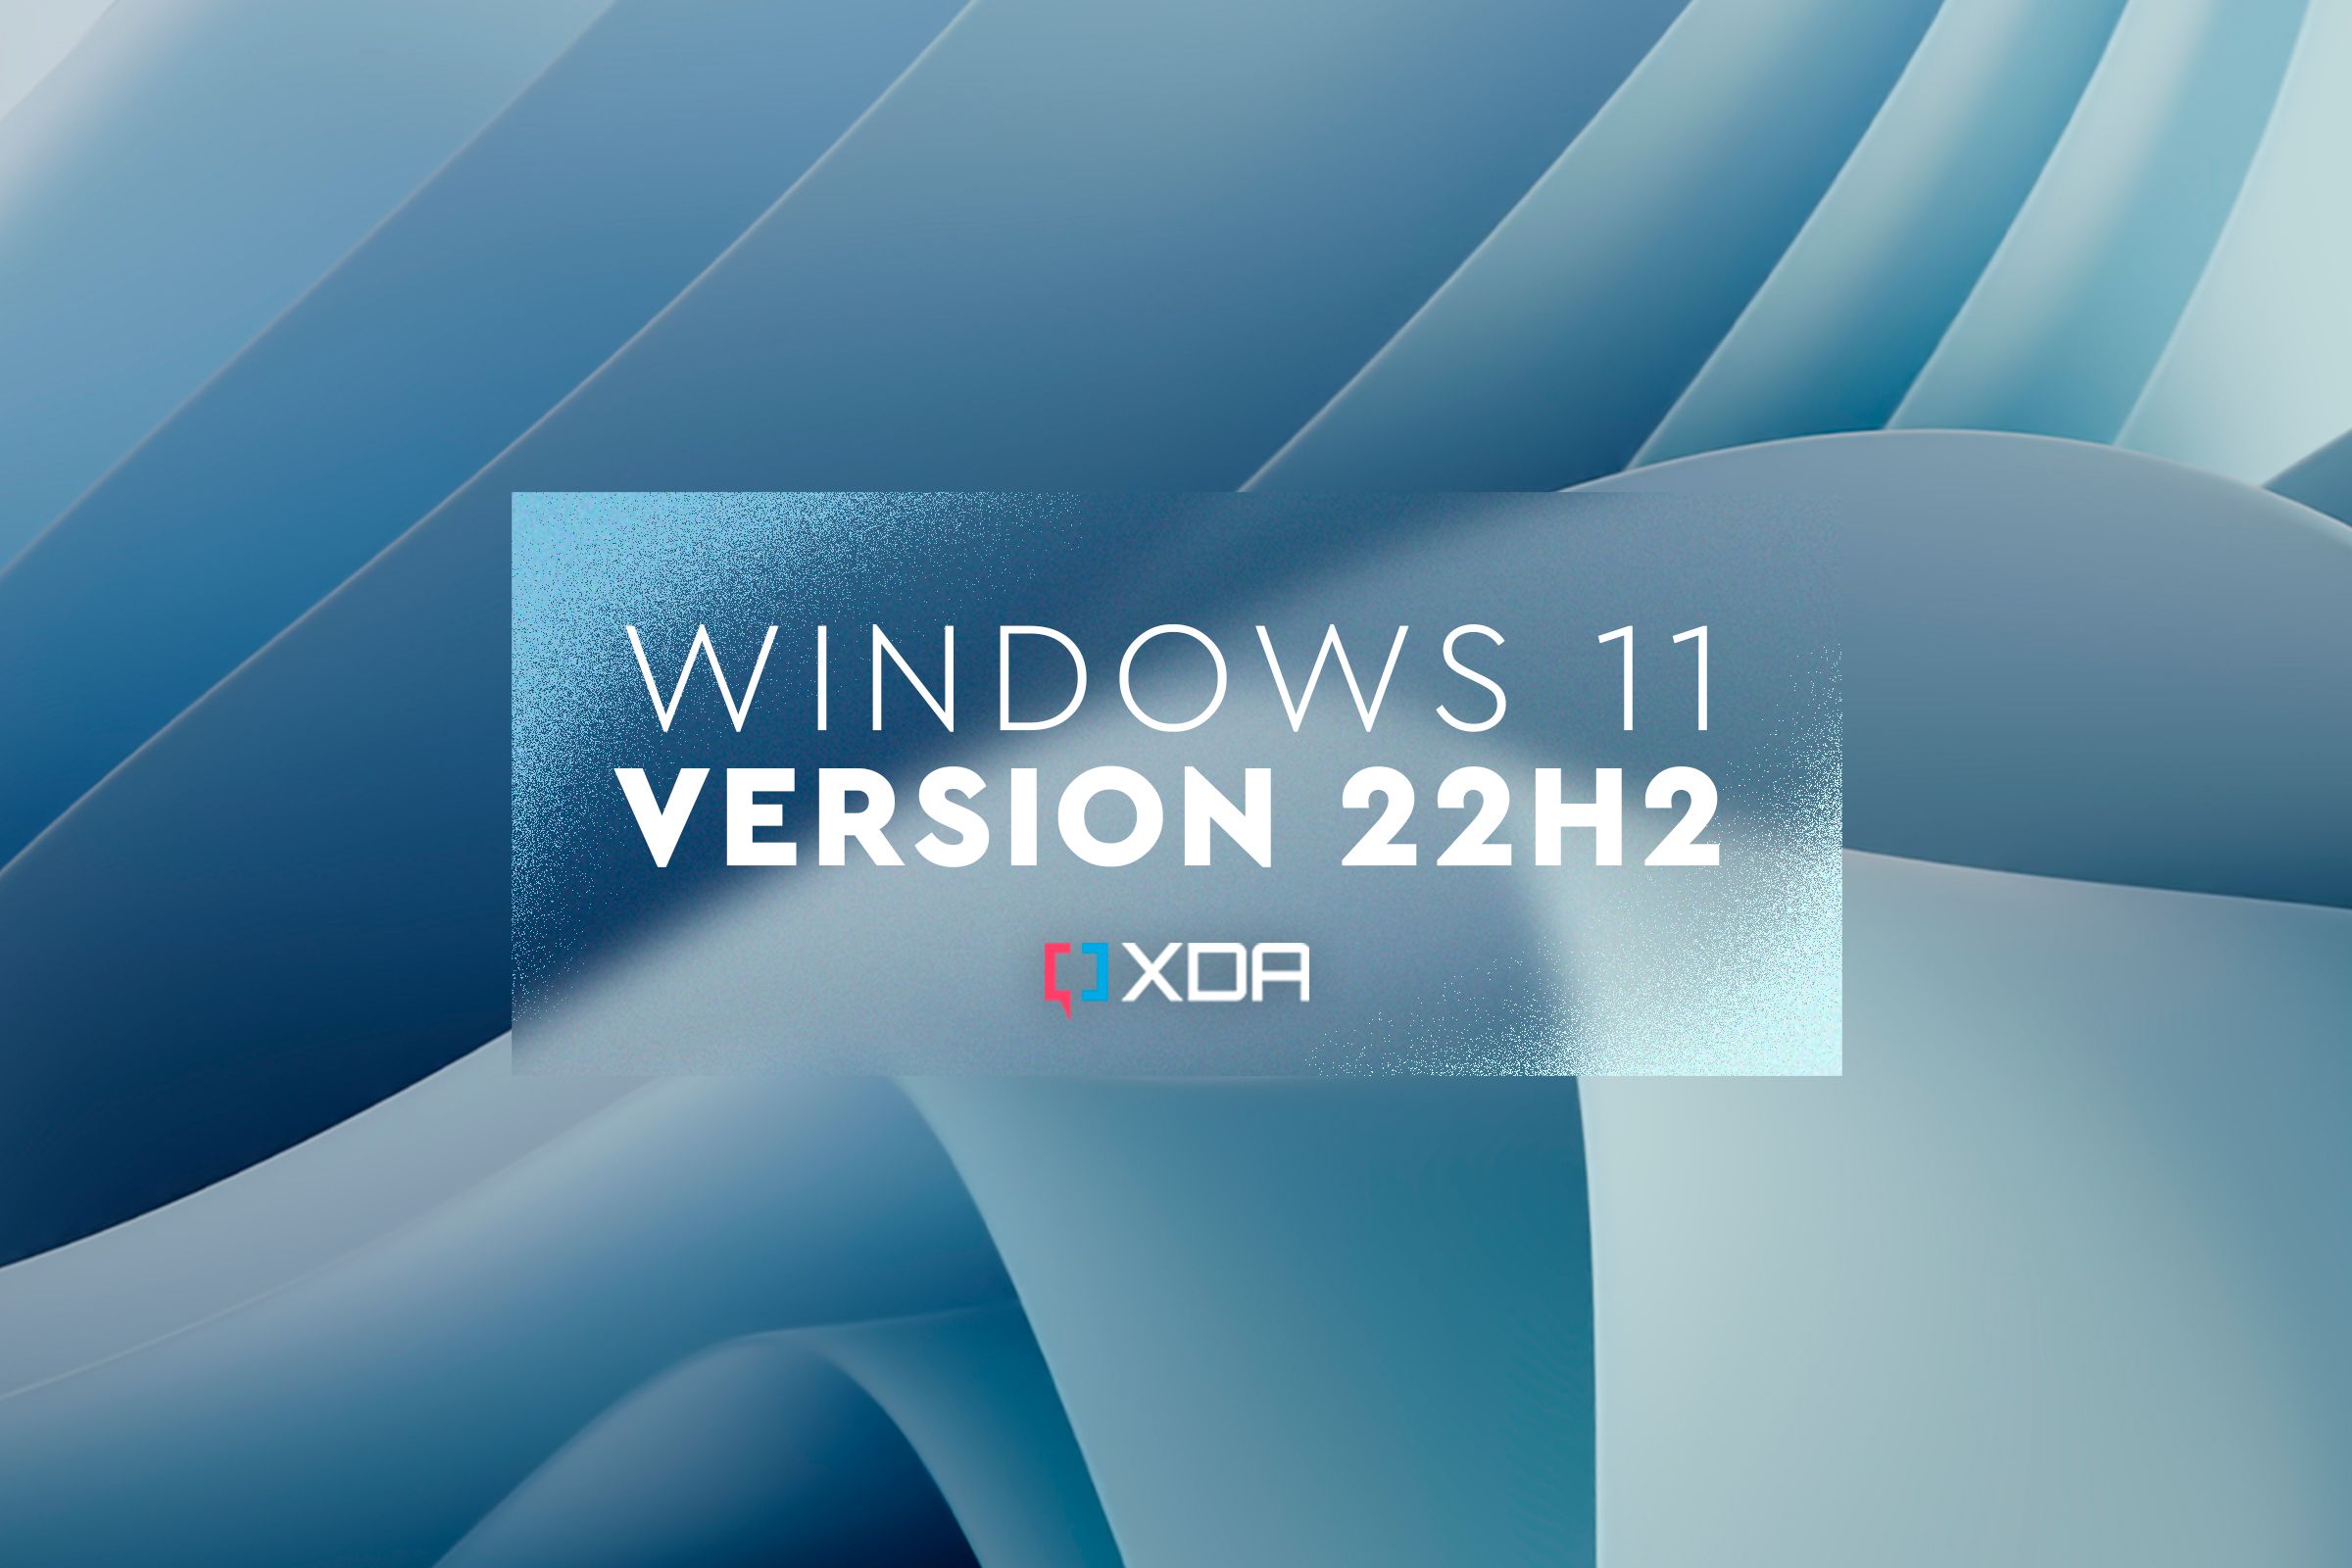 Windows 11 version 22H2